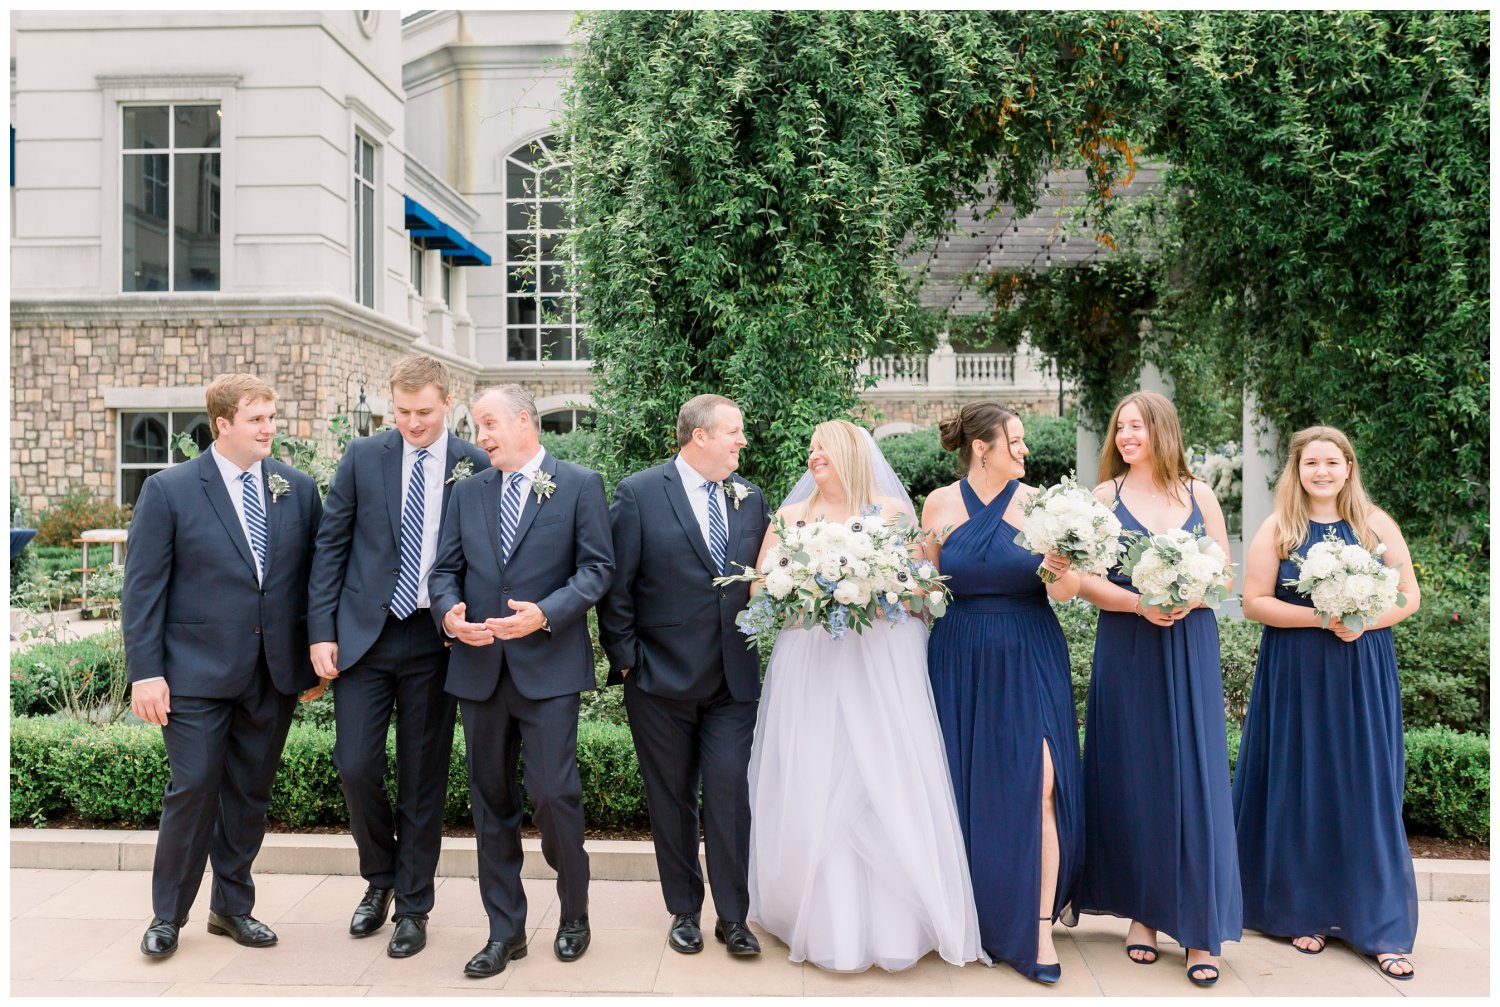 Garden inspired wedding in Charlotte North Carolina by top wedding photographer Samantha Laffoon